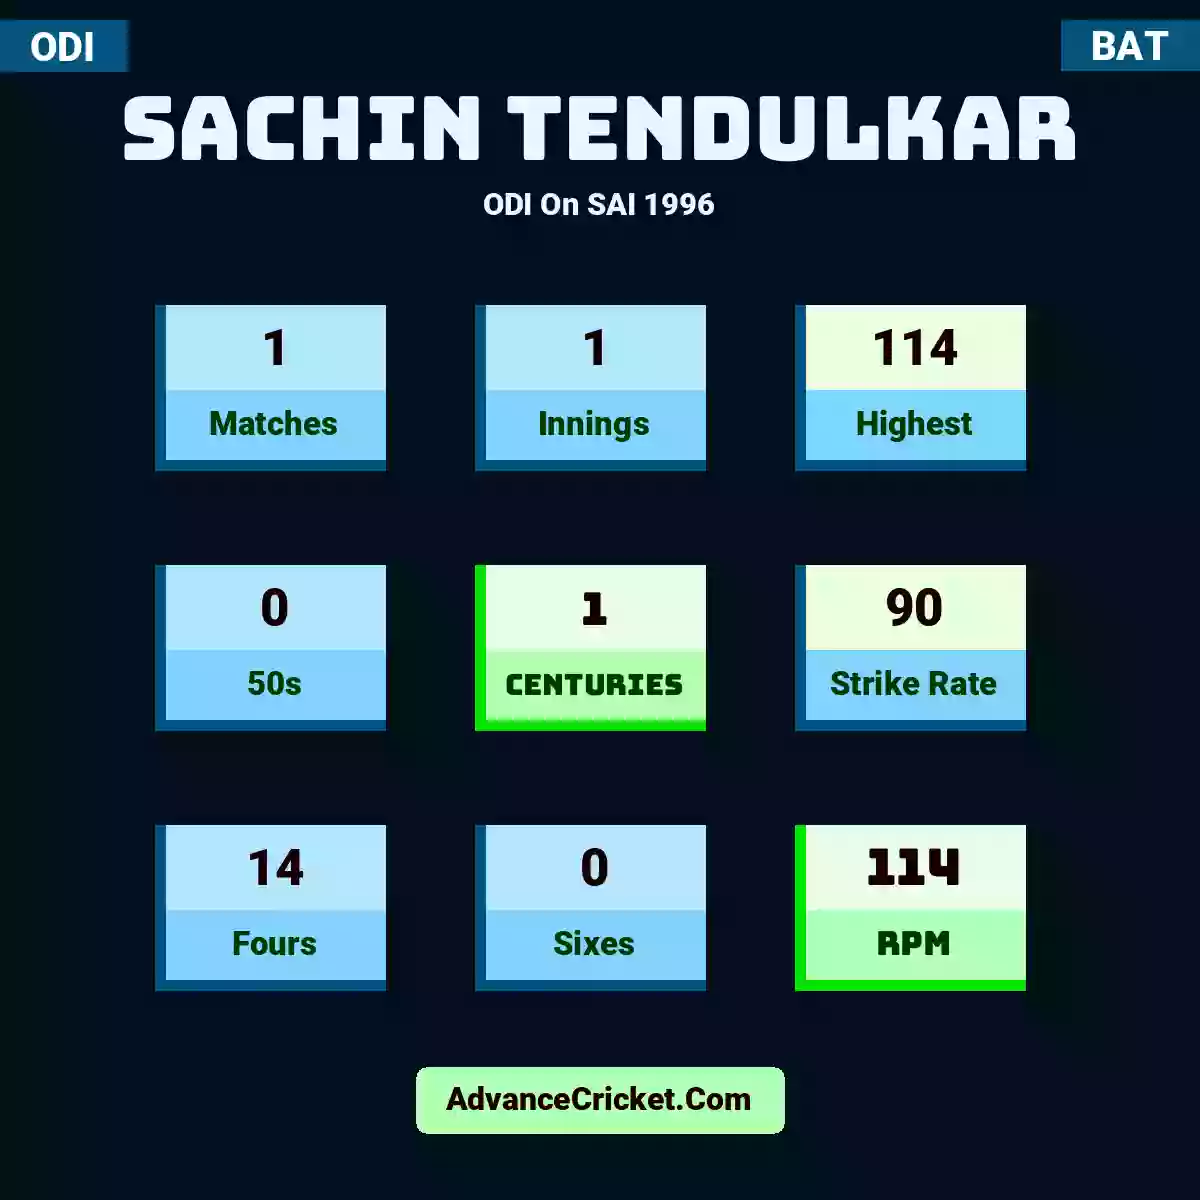 Sachin Tendulkar ODI  On SAI 1996, Sachin Tendulkar played 1 matches, scored 114 runs as highest, 0 half-centuries, and 1 centuries, with a strike rate of 90. S.Tendulkar hit 14 fours and 0 sixes, with an RPM of 114.